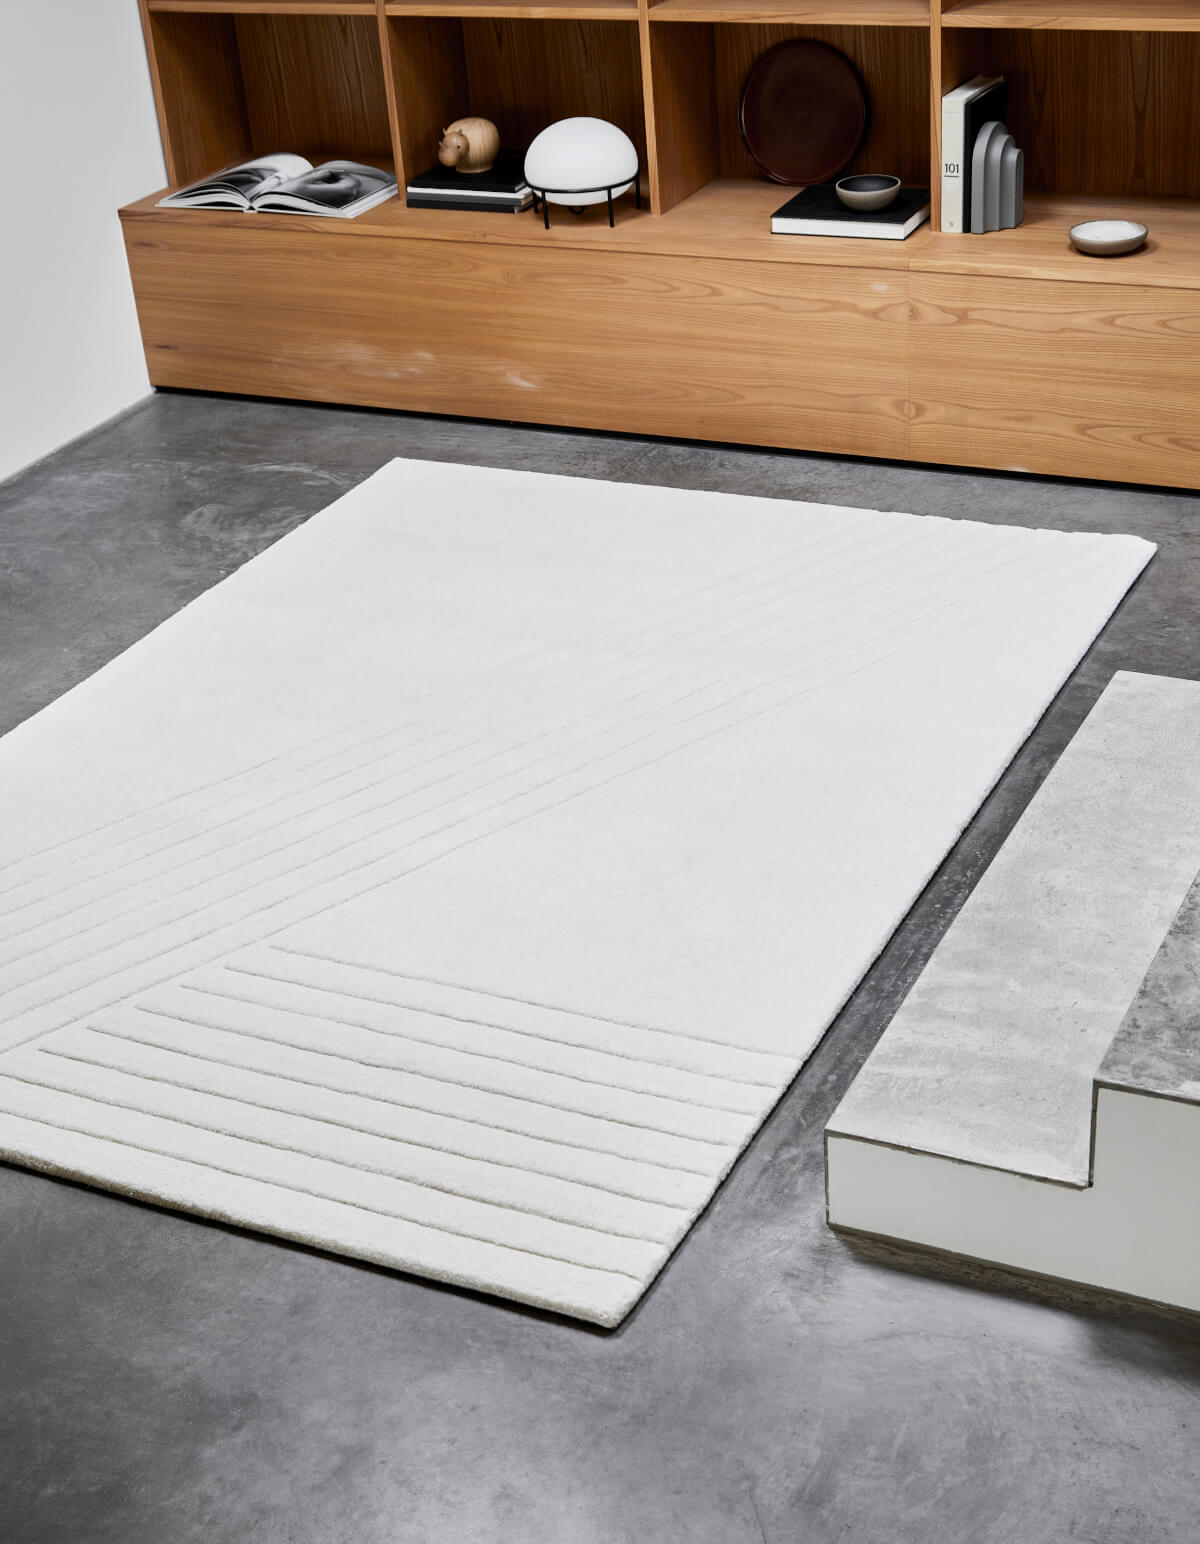 Kyoto Teppich, 170 x 240 cm, off white